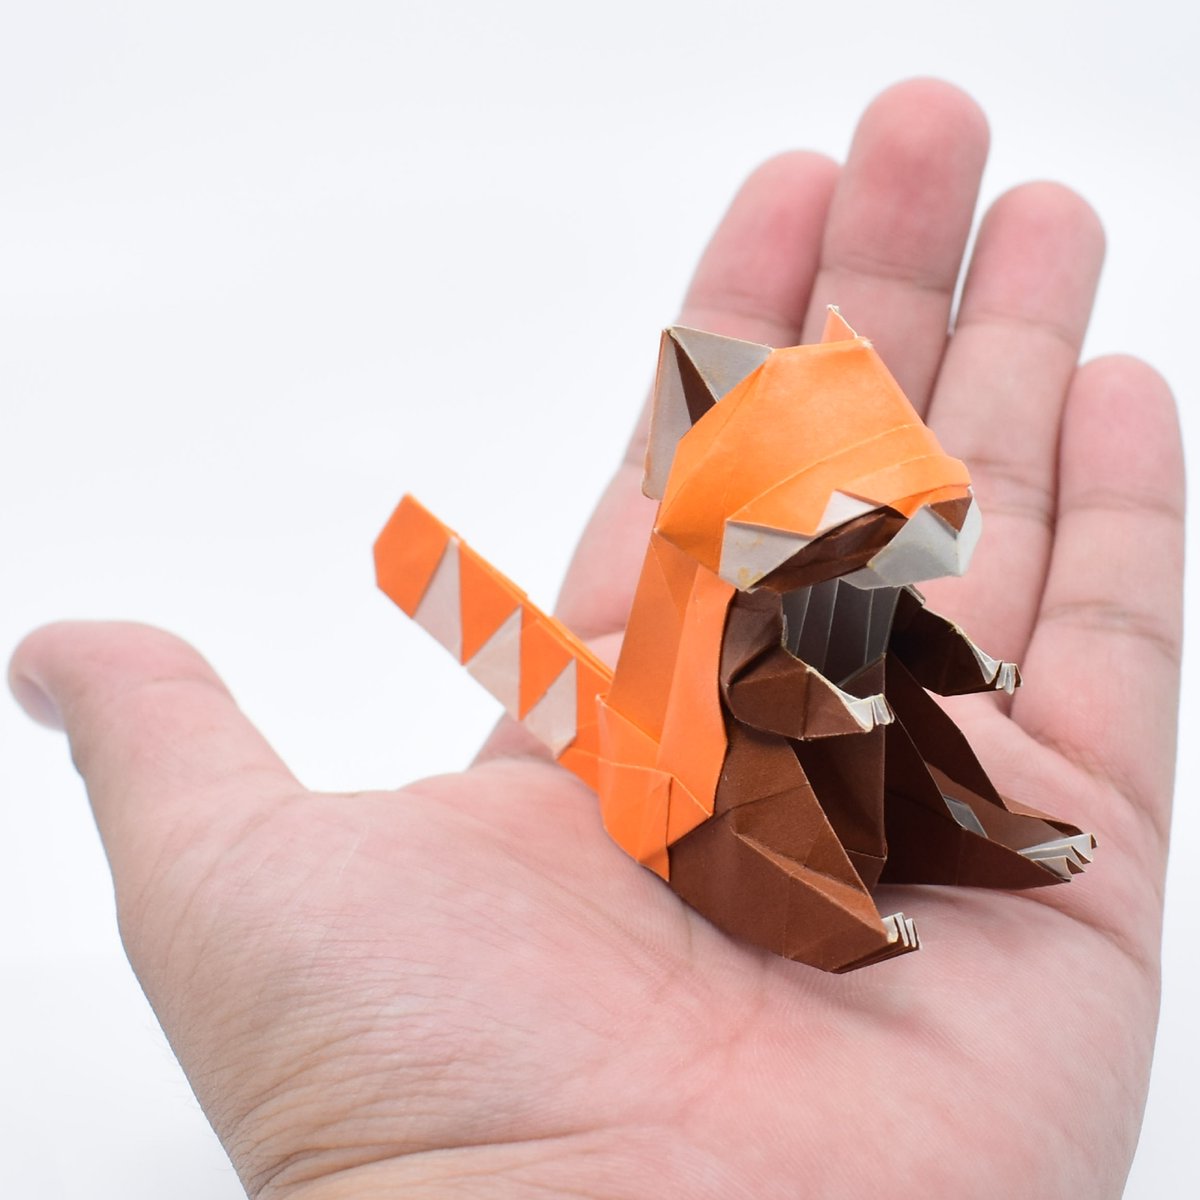 🌳🐼
Red Panda - Kyohei Katsuta
2 pieces of Origami Paper 15cm x 15cm
.
#origami #摺紙 #折紙 #折纸 #折り紙 #おりがみ #paper #art #artist #paperart #origamiart #fold #paperfolding #craft #papercraft #gallery #photooftheday #artoftheday #origamiworkshop #kyoheikatsuta #勝田恭平